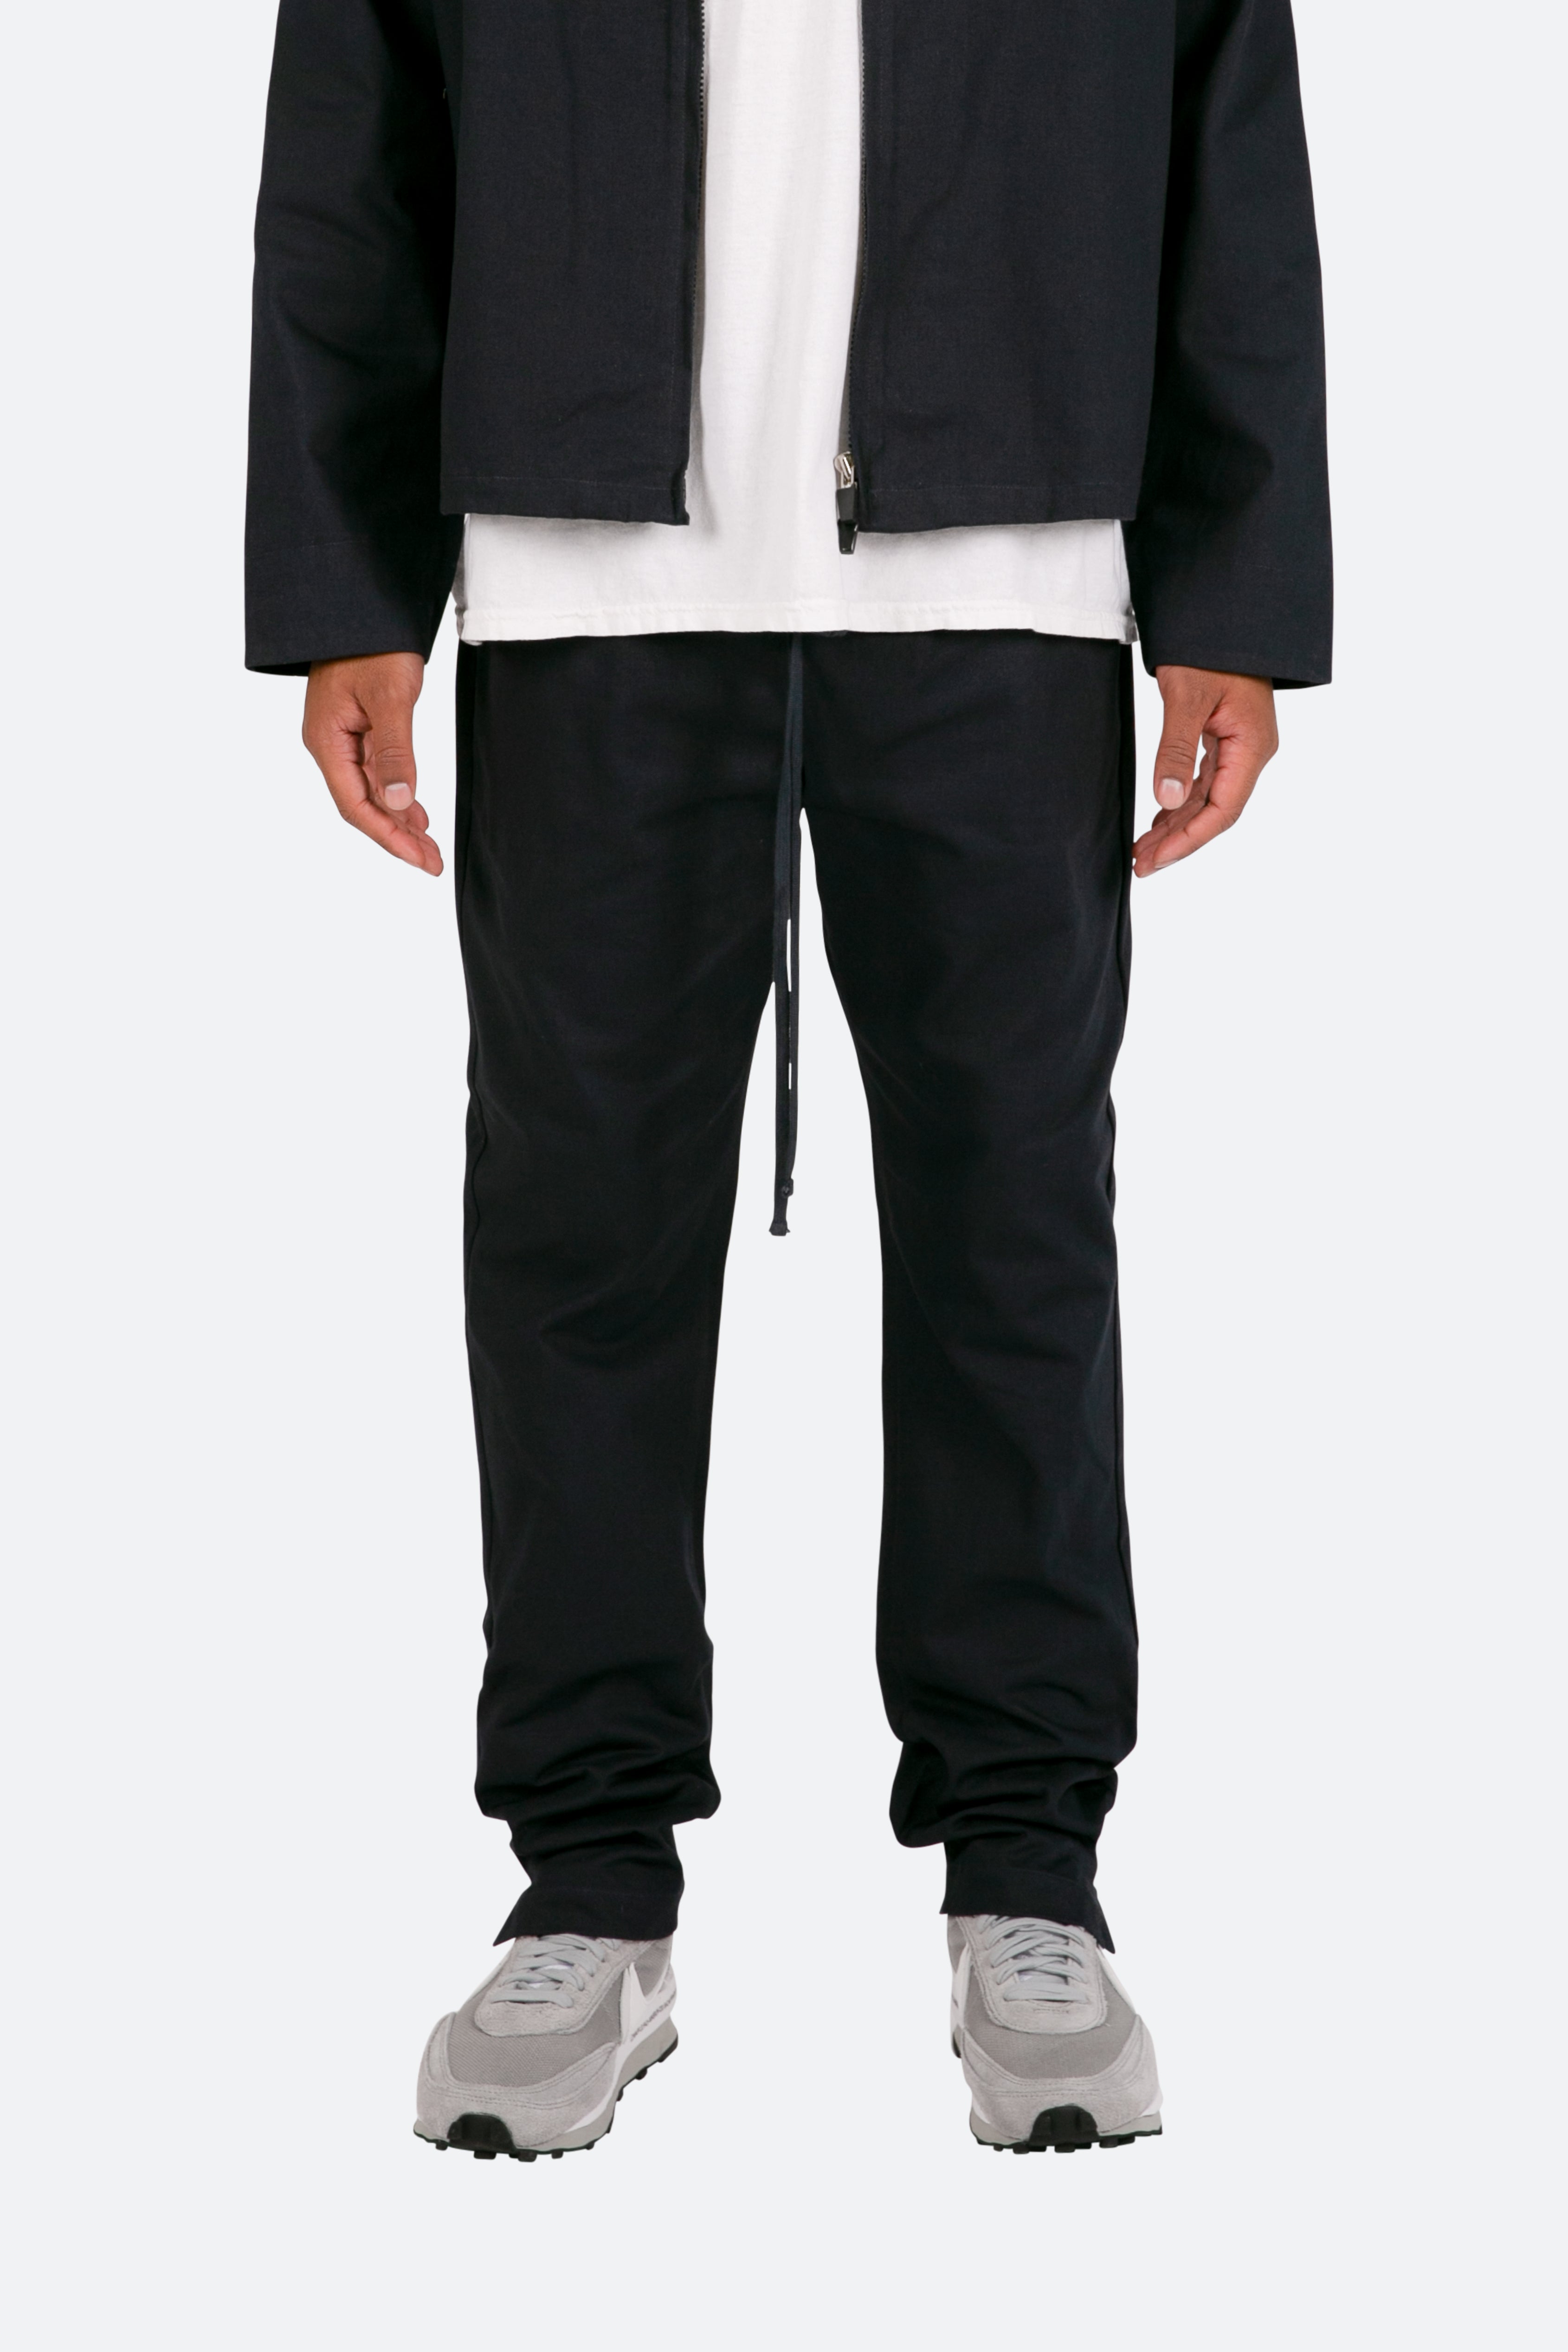 Multi Zip Cargo Pants - Stone | mnml | shop now